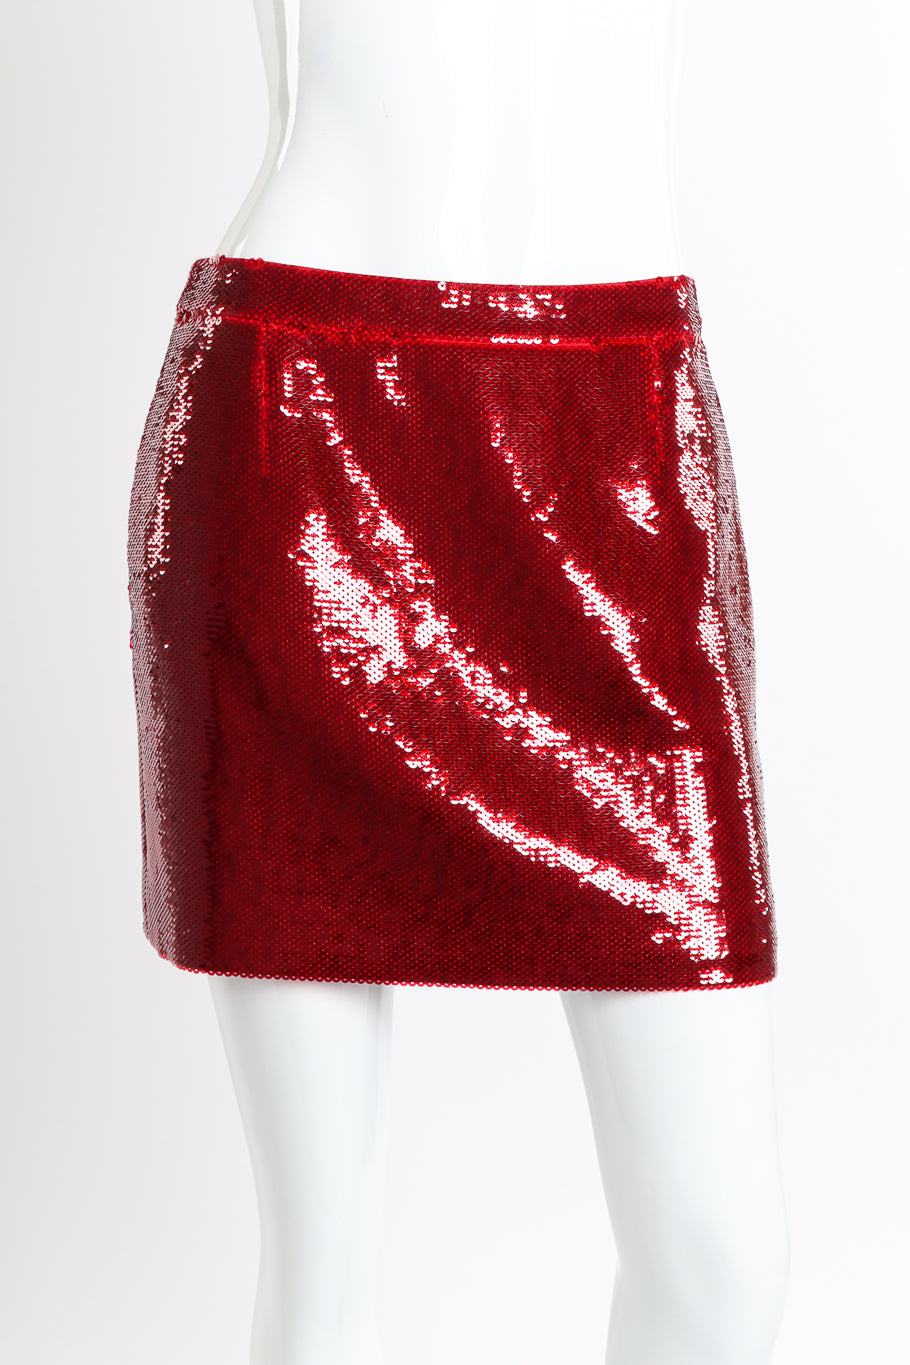 Saint Laurent Sequin Mini Skirt front on mannequin closeup @recessla